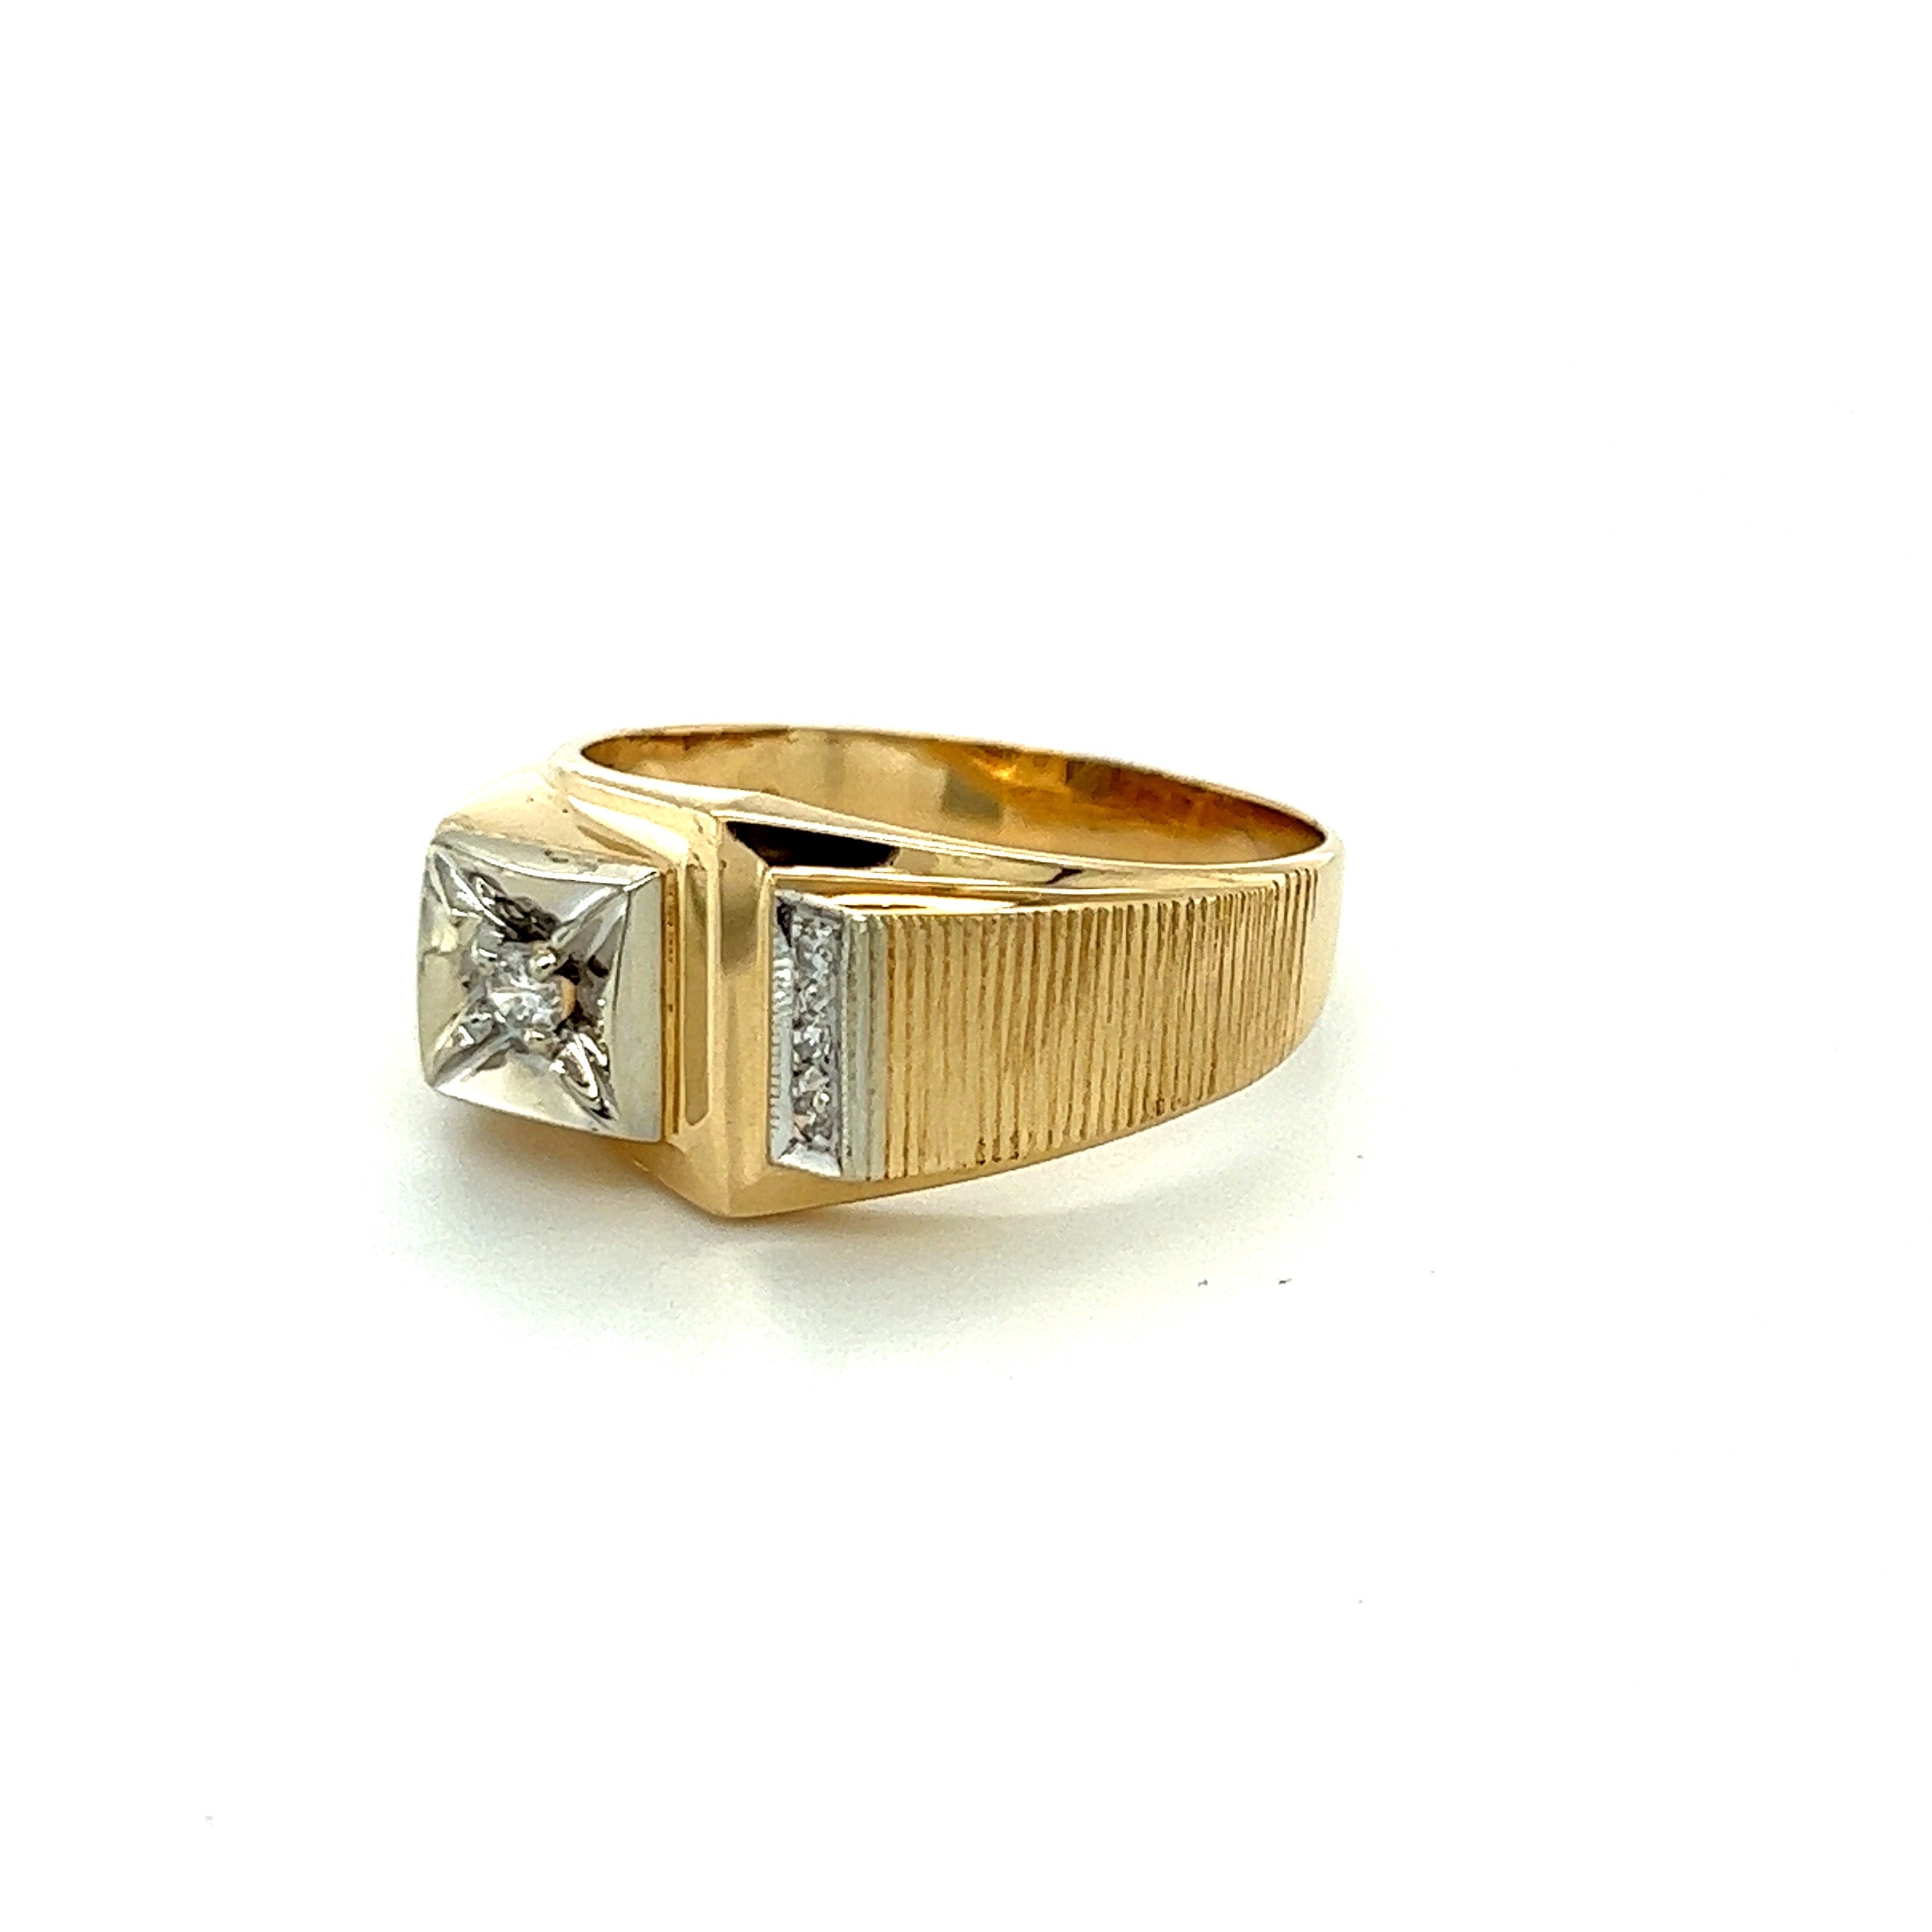 Designer Platinum Wedding Ring with Single Round Diamond and Satin Finish |  6mm - MB0194 – Mens Wedding Rings